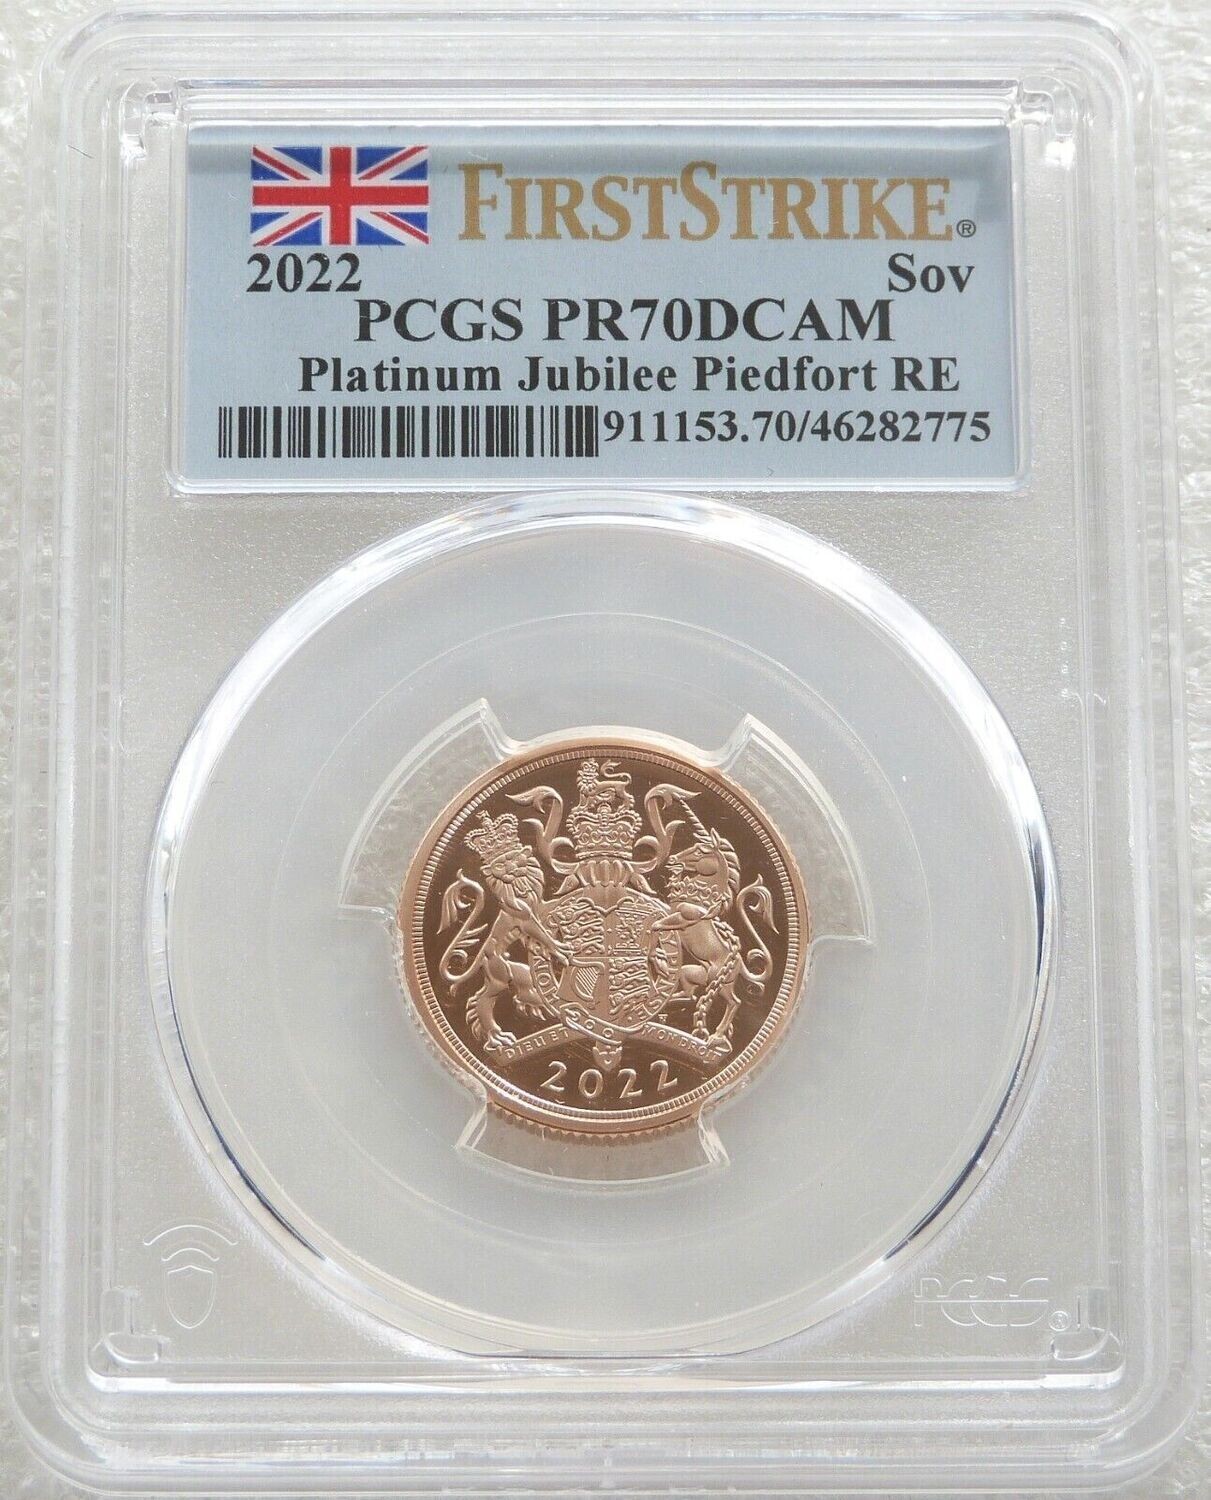 2022 Platinum Jubilee Piedfort Sovereign Gold Proof Coin PCGS PR70 DCAM First Strike